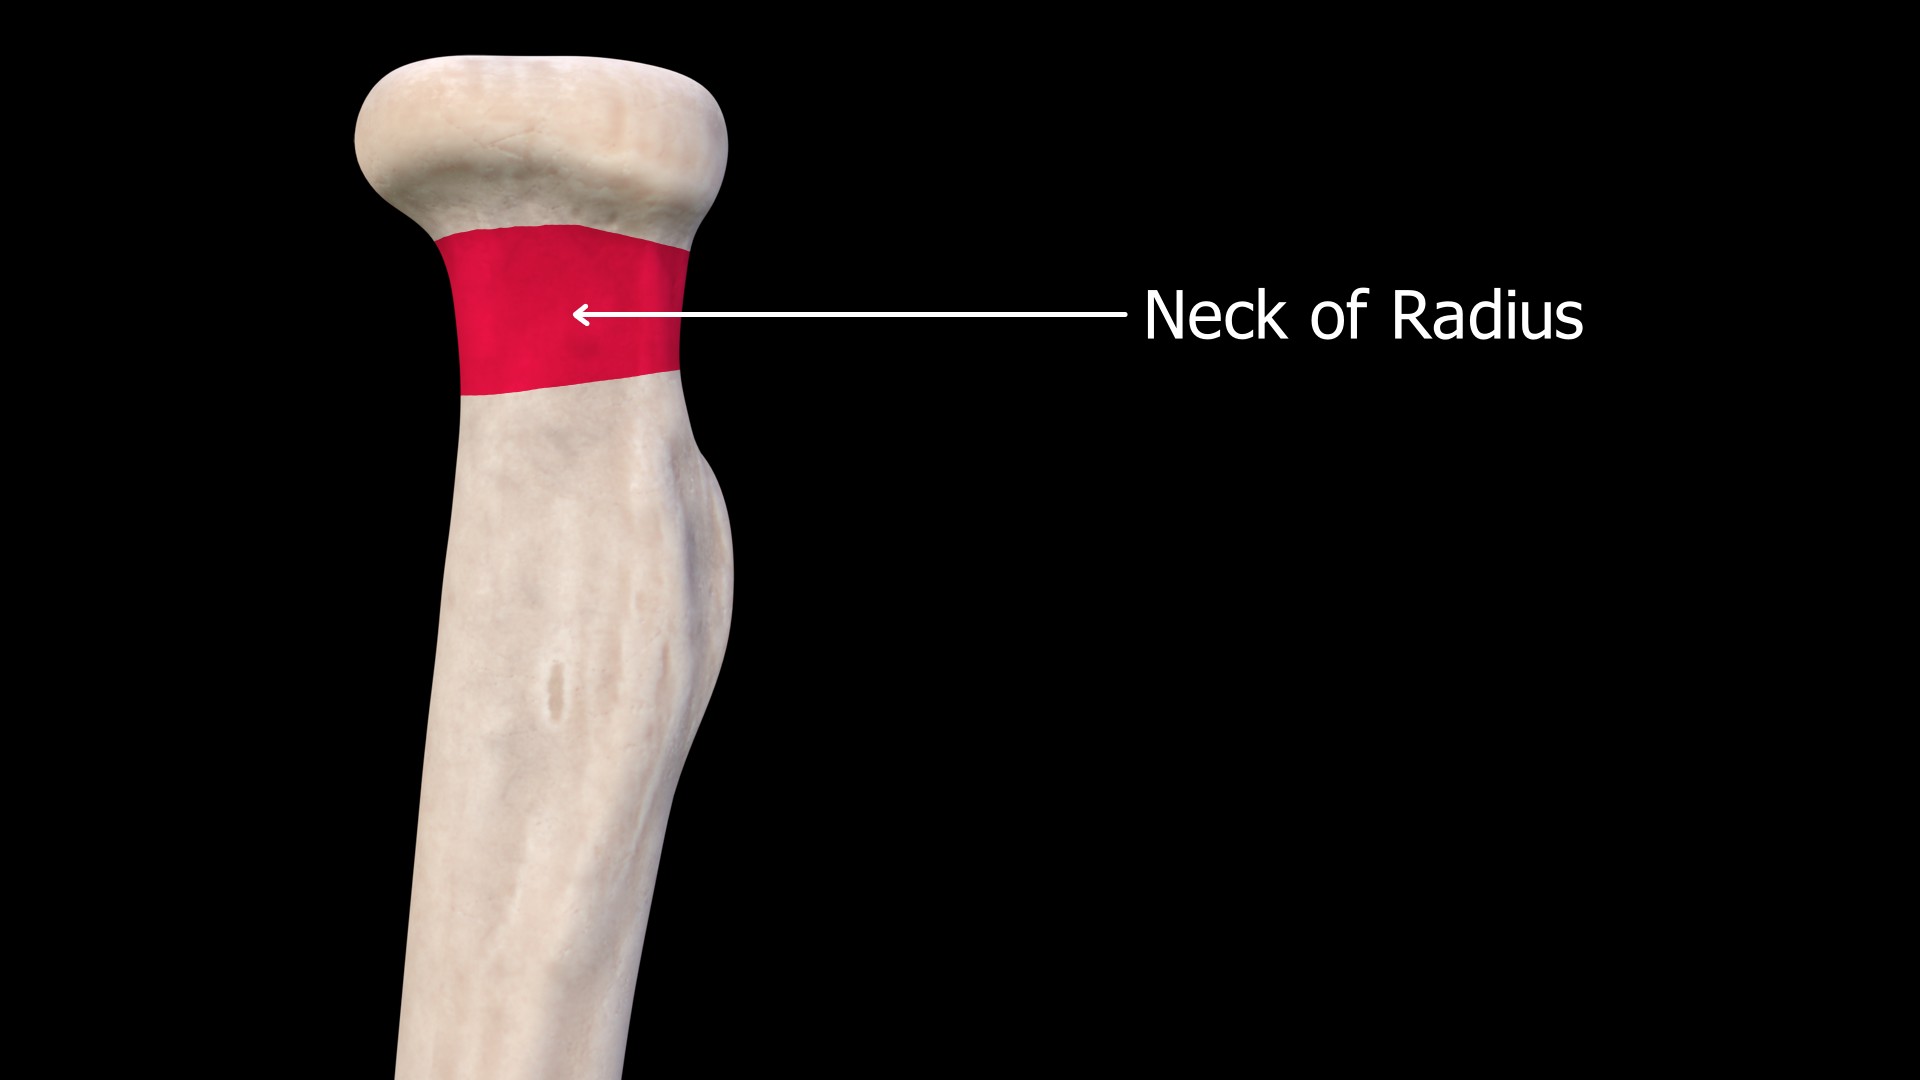 radius bone labeled